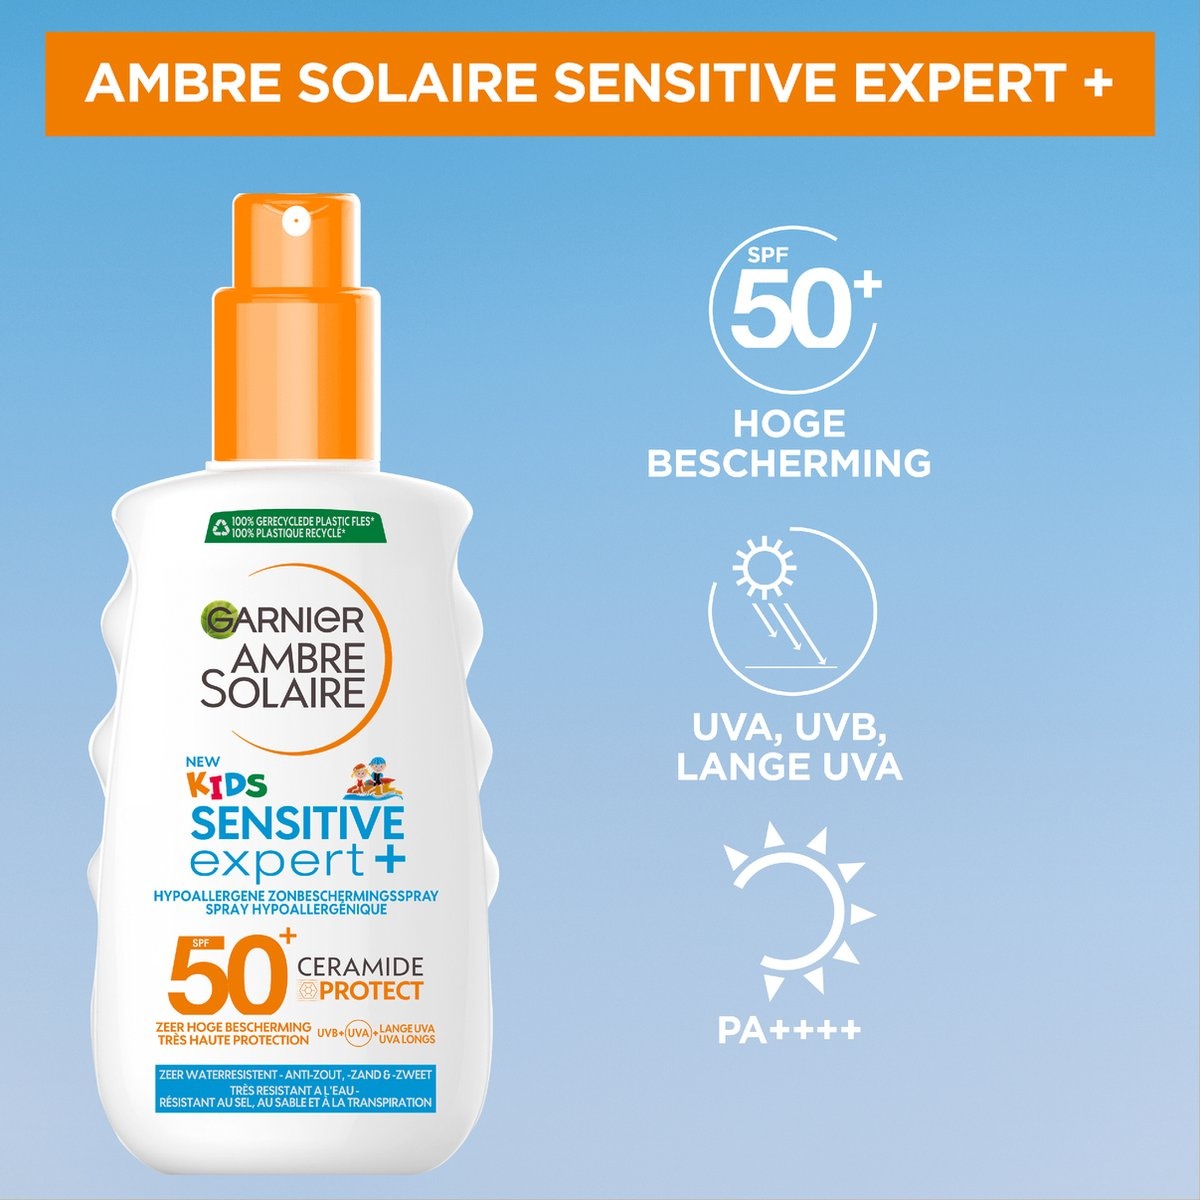 Garnier Ambre Solaire Kids Ceramide Protect Zonnebrandspray SPF 50+ 150 ml - pompje beschadigd